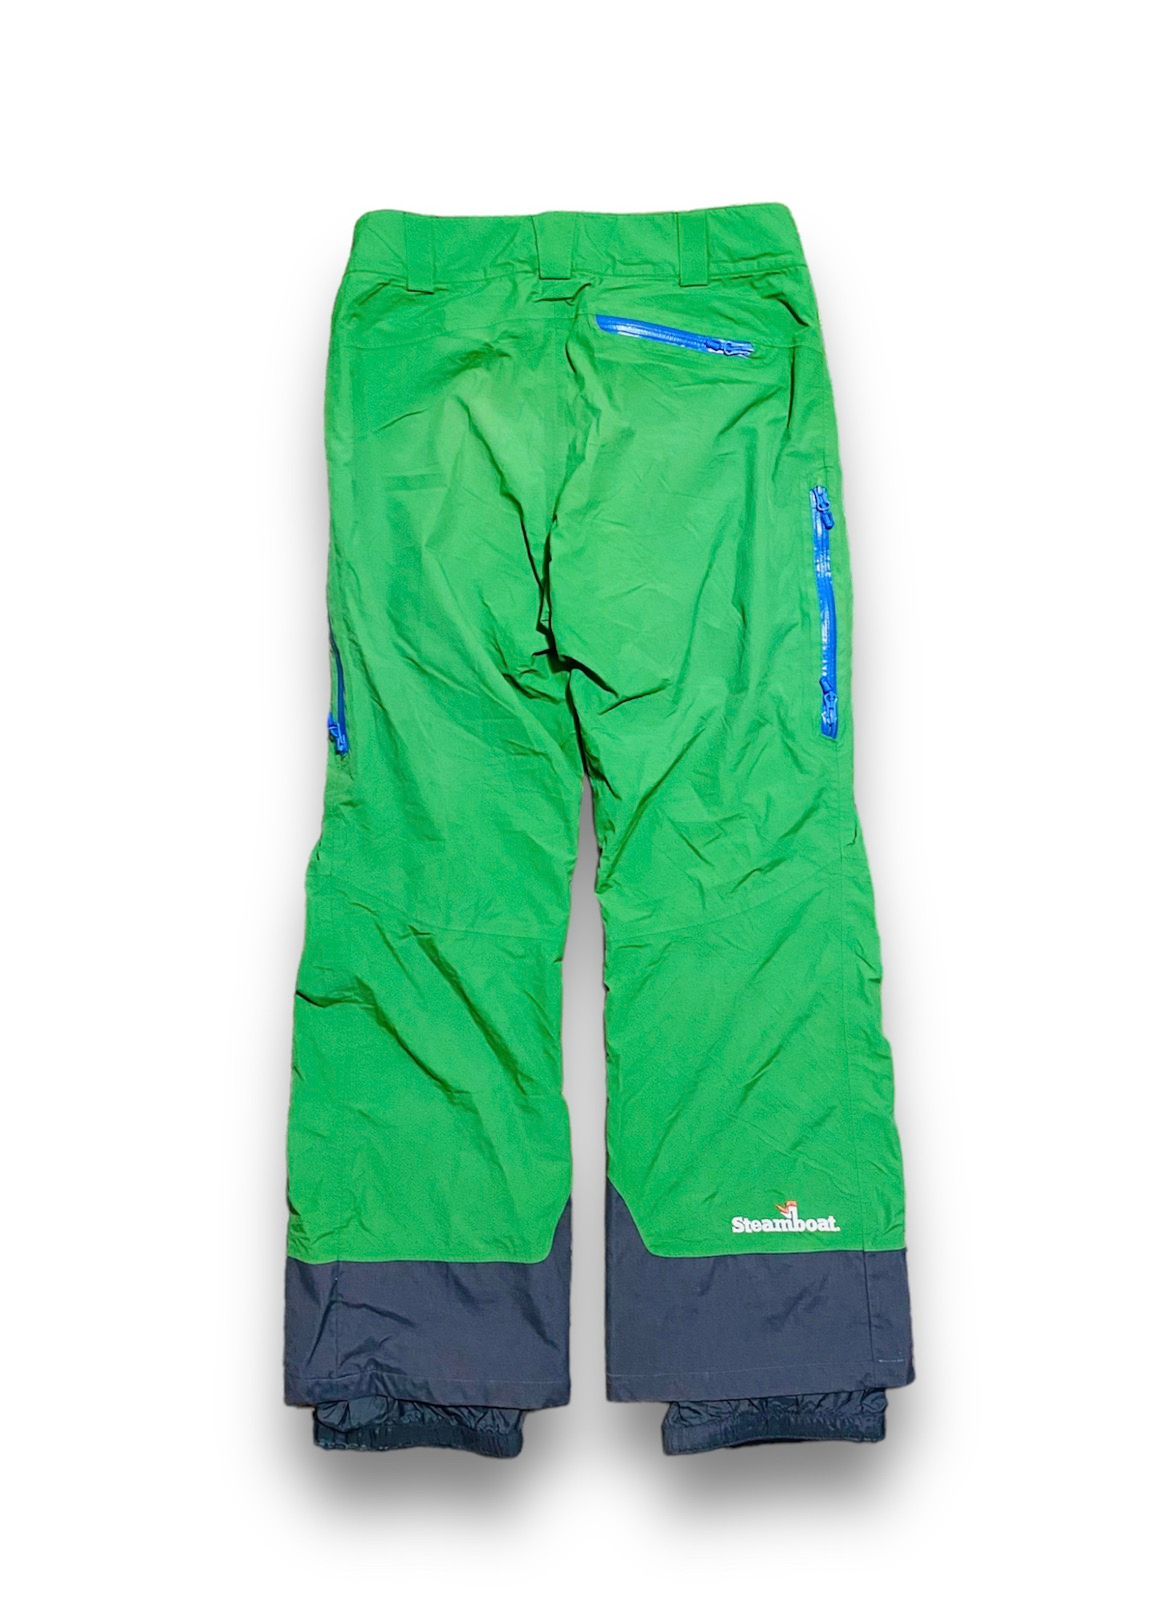 Marmot GTX Pants Trousers Skiing Hiking Outdoor Green Men M - 5